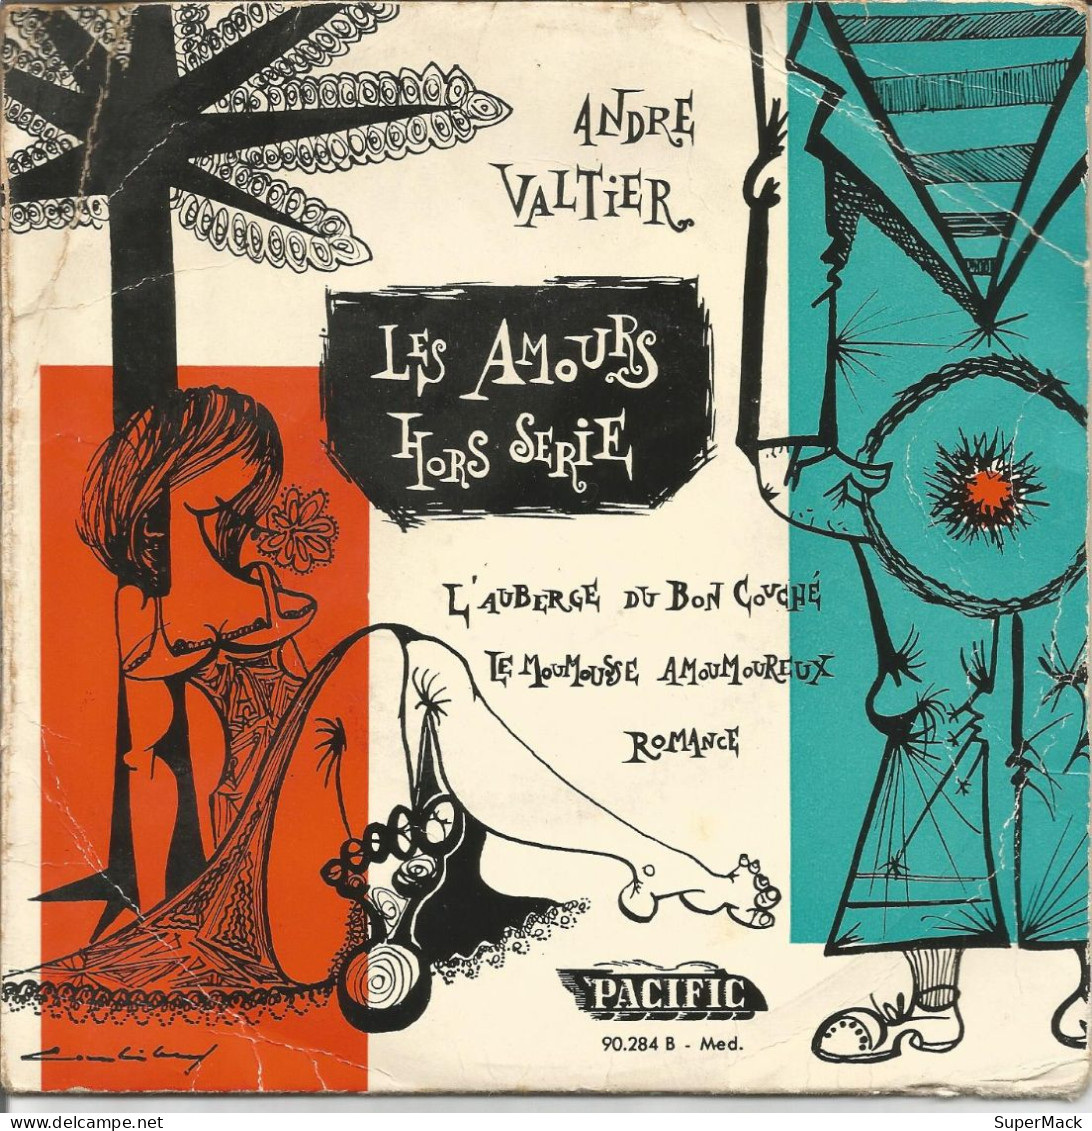 45T André Valtier - Les Amours Hors Série - Pacific 90.284B - 1958 - Ediciones De Colección